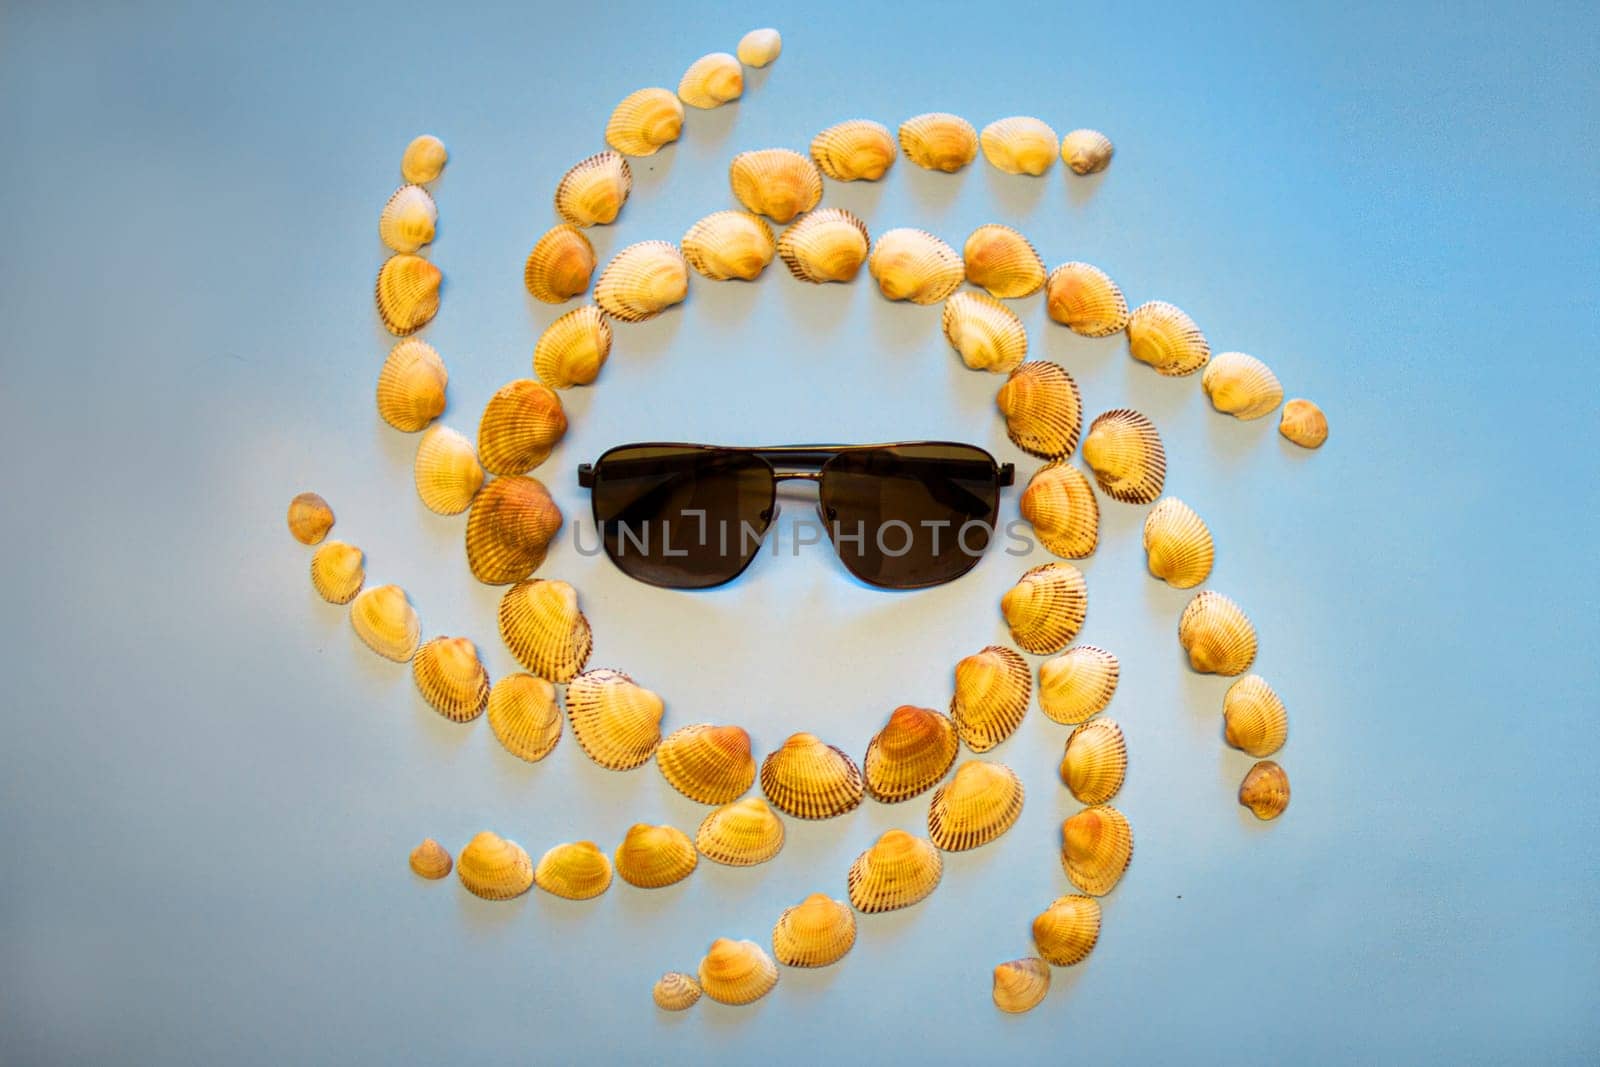 Sun of shells in sunglasses by VeronikaAngo